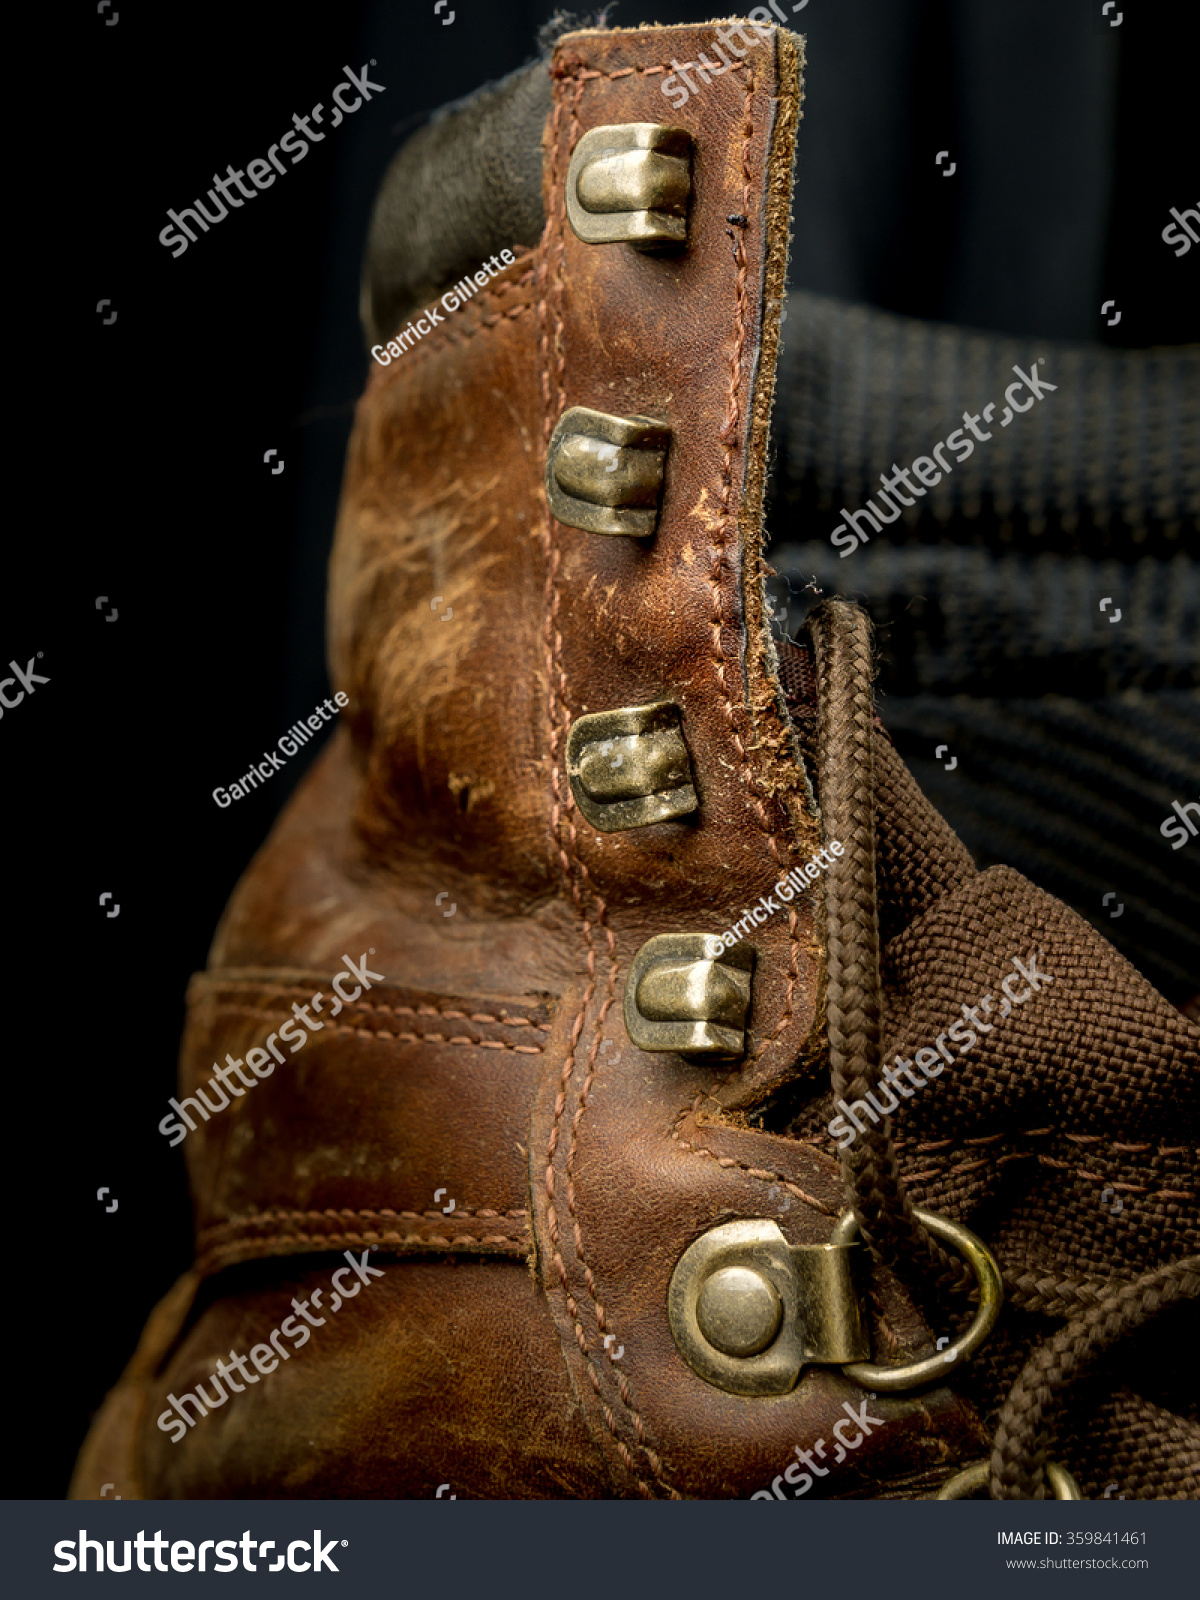 gillette work boots